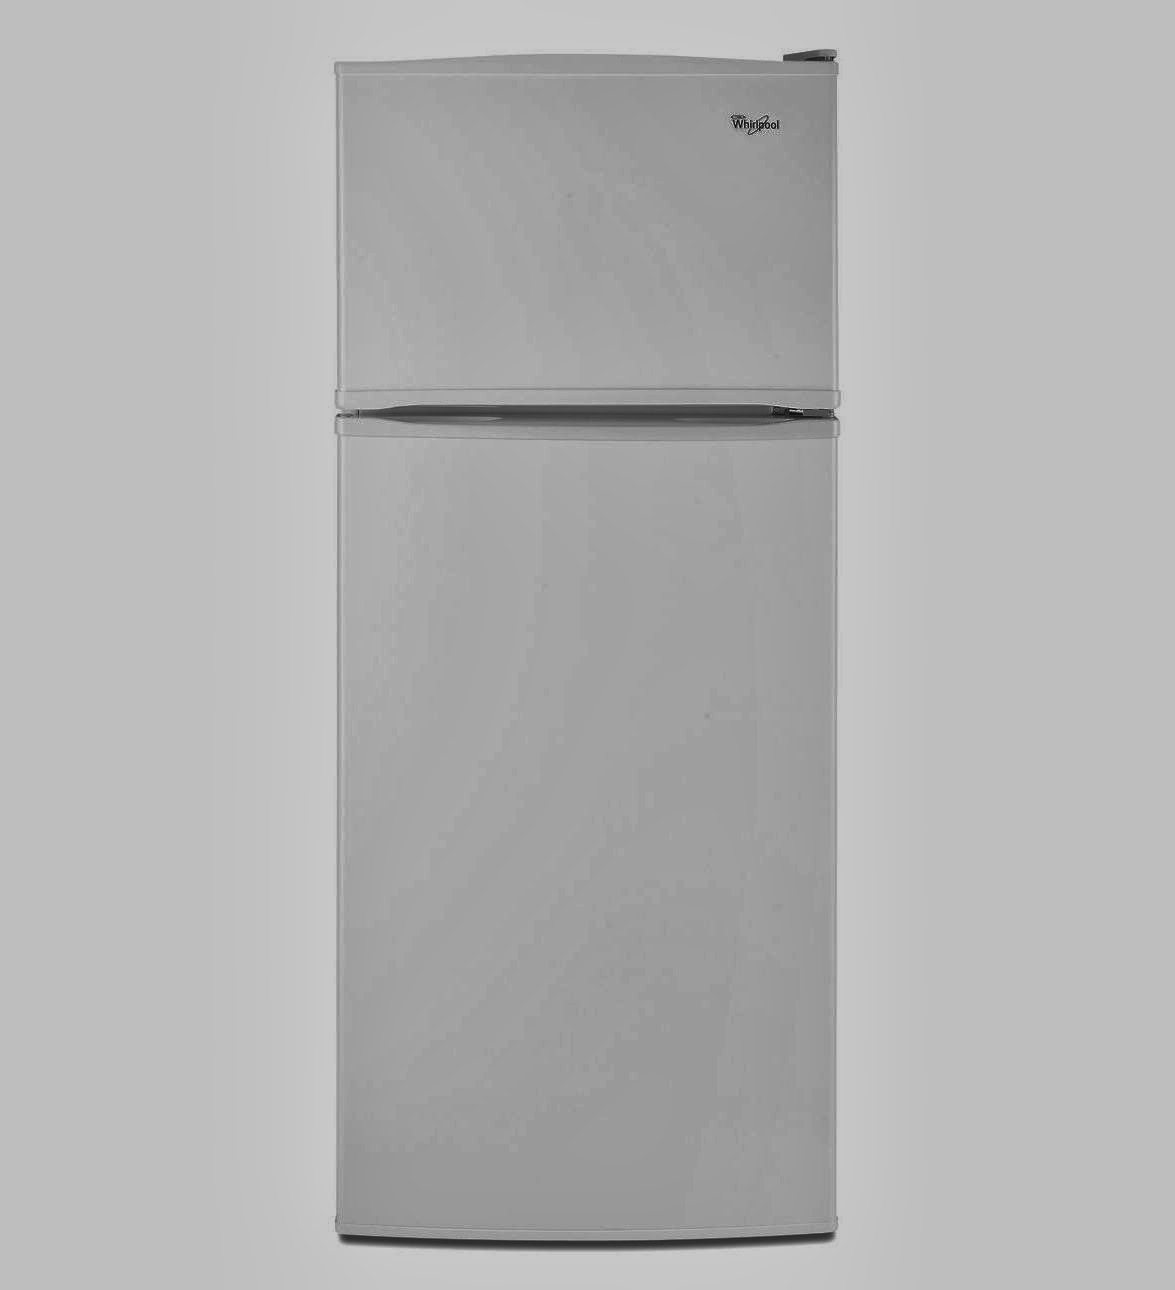 Холодильник Вирпул двухкамерный. Холодильник Whirlpool с верхней морозильной камерой. Холодильник Вирпул 2006. Холодильник Whirlpool широкий. Холодильник 8 часов